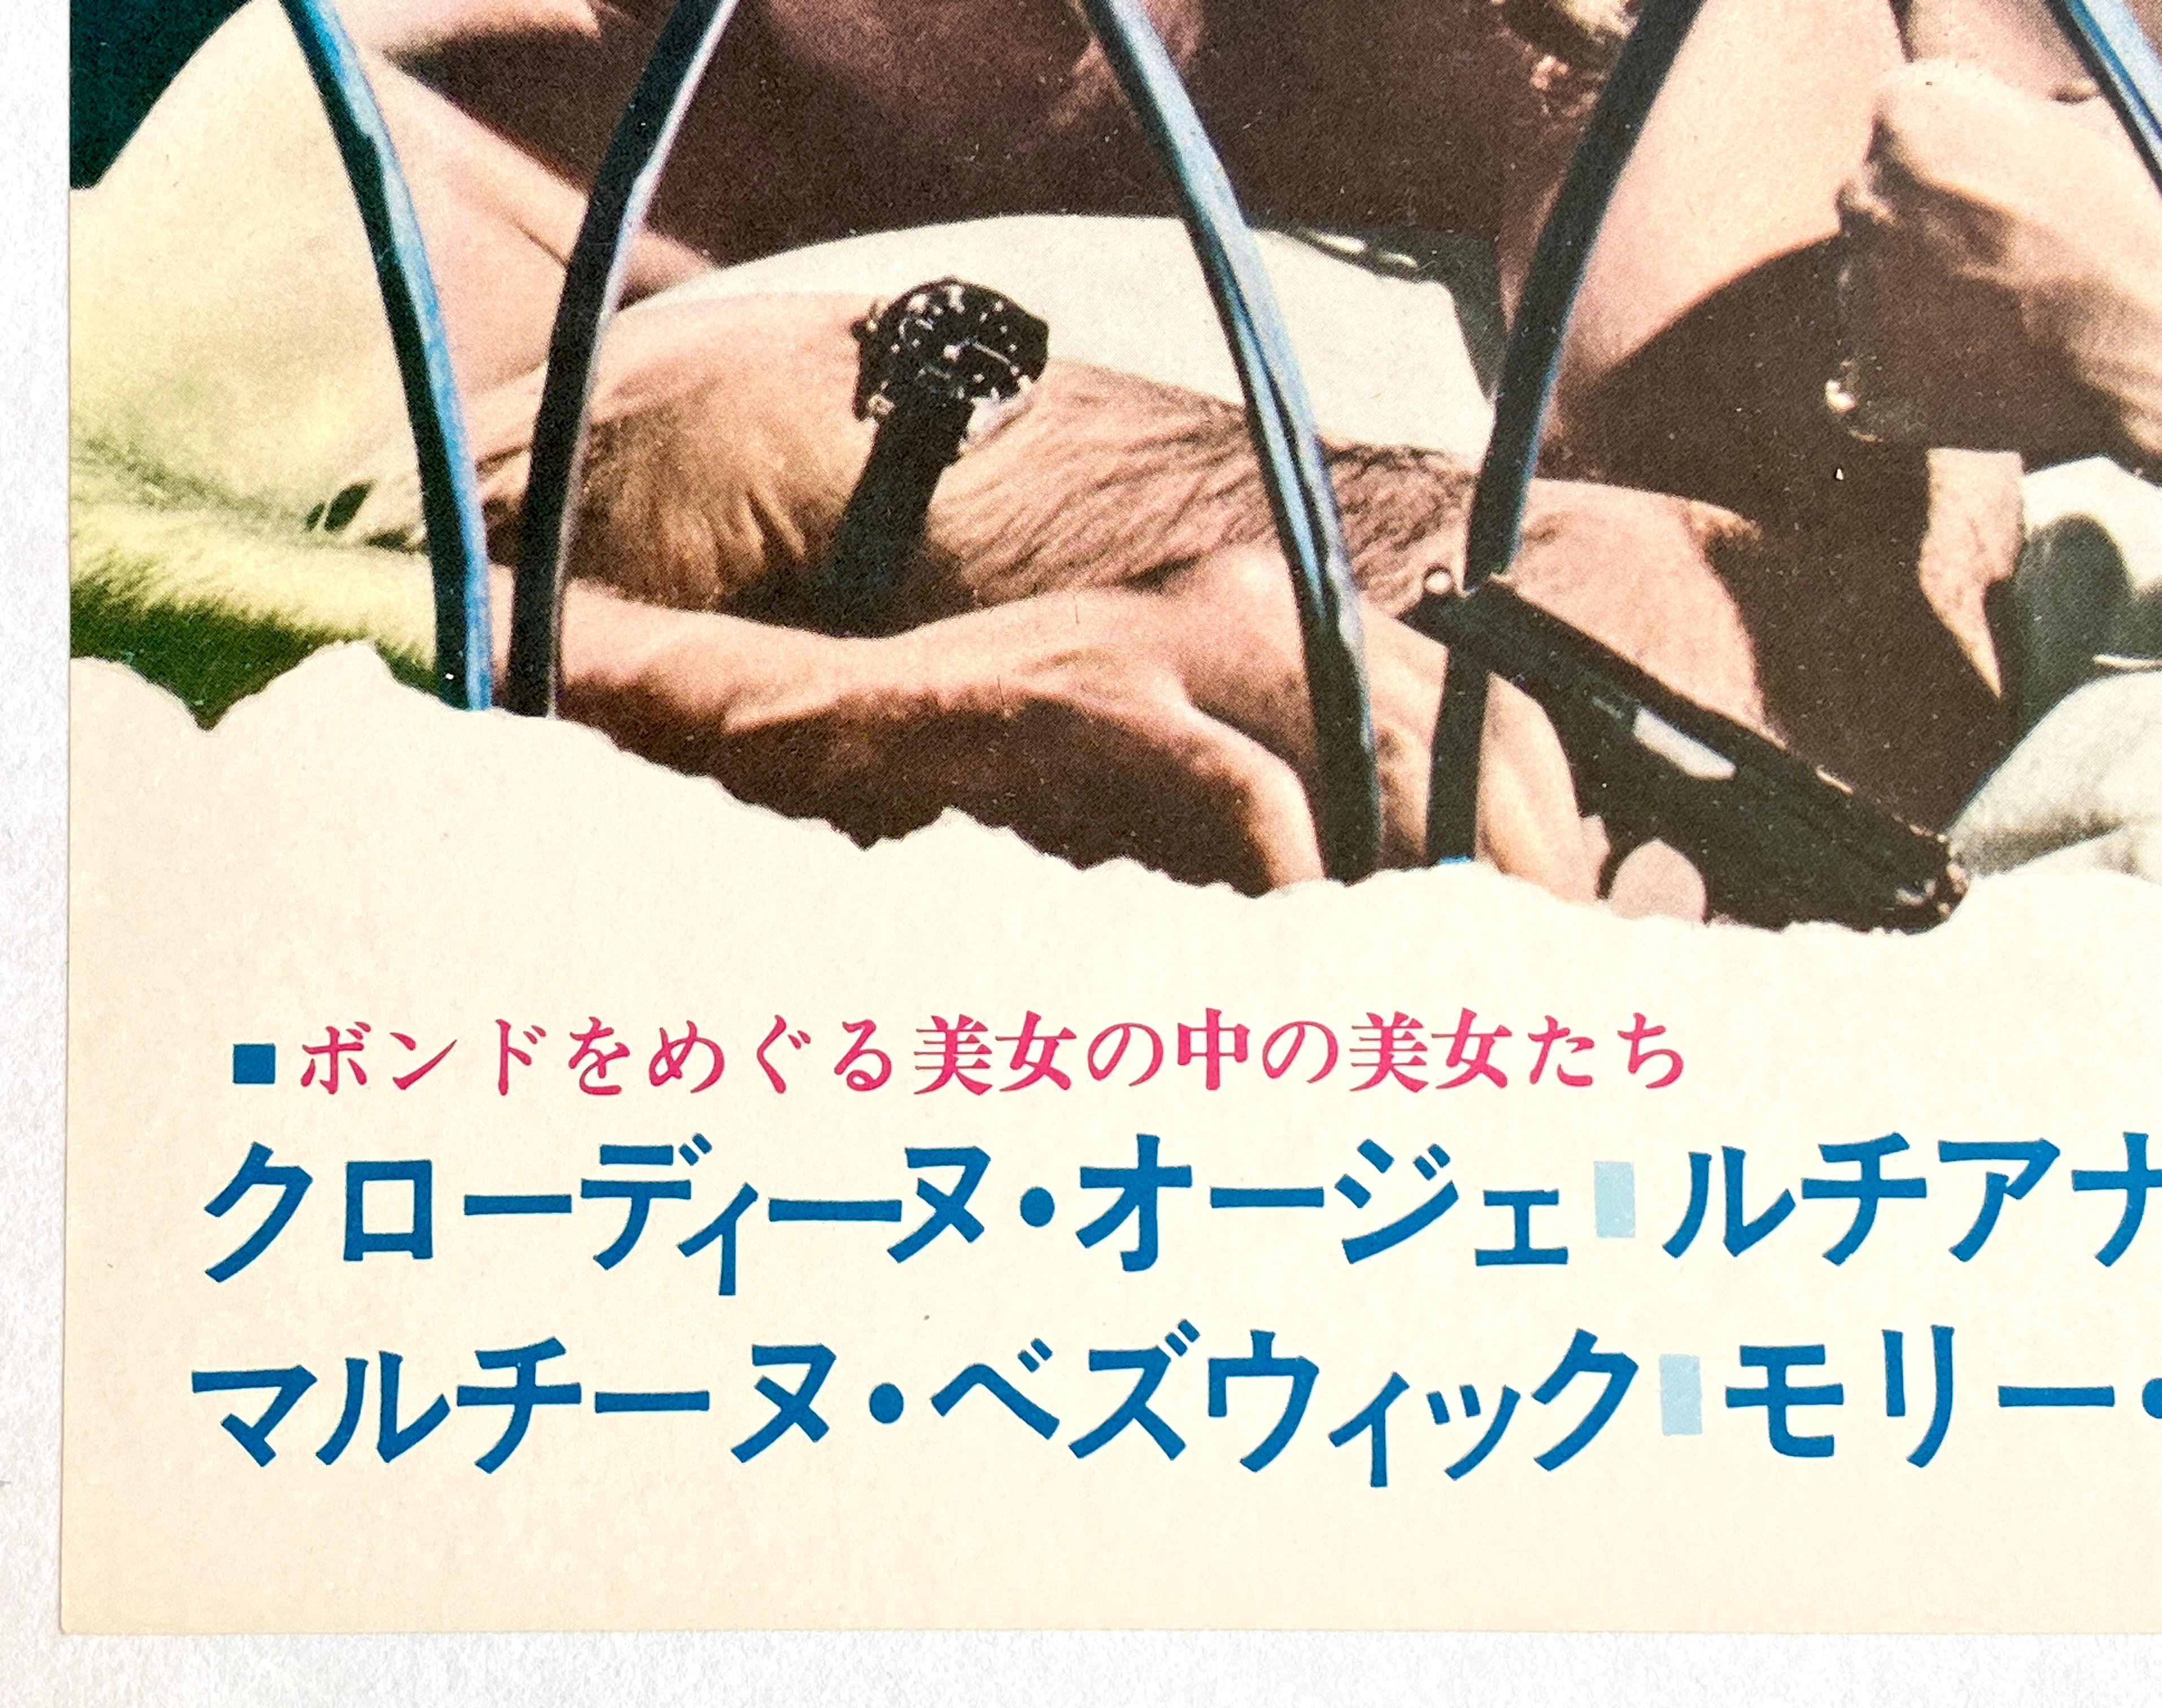 Paper James Bond 'Thunderball' Original Vintage Movie Poster, Japanese, 1965 For Sale